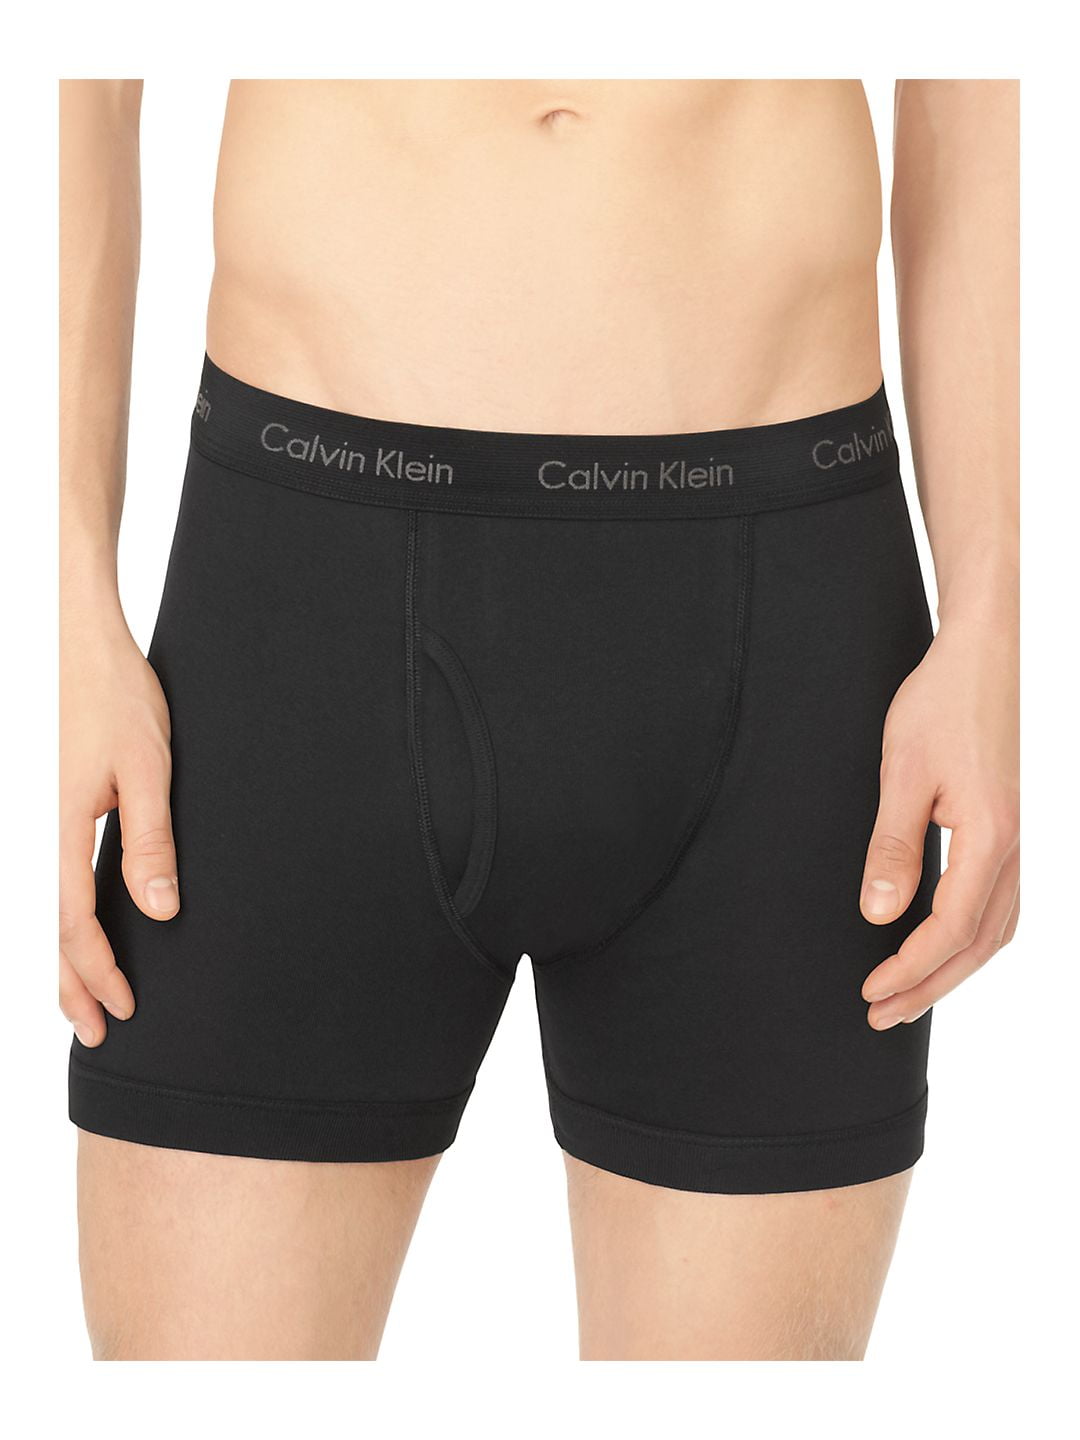 condoom bestellen Bloedbad Calvin Klein Men's Cotton Classic Boxer Brief (3-Pack) - Walmart.com